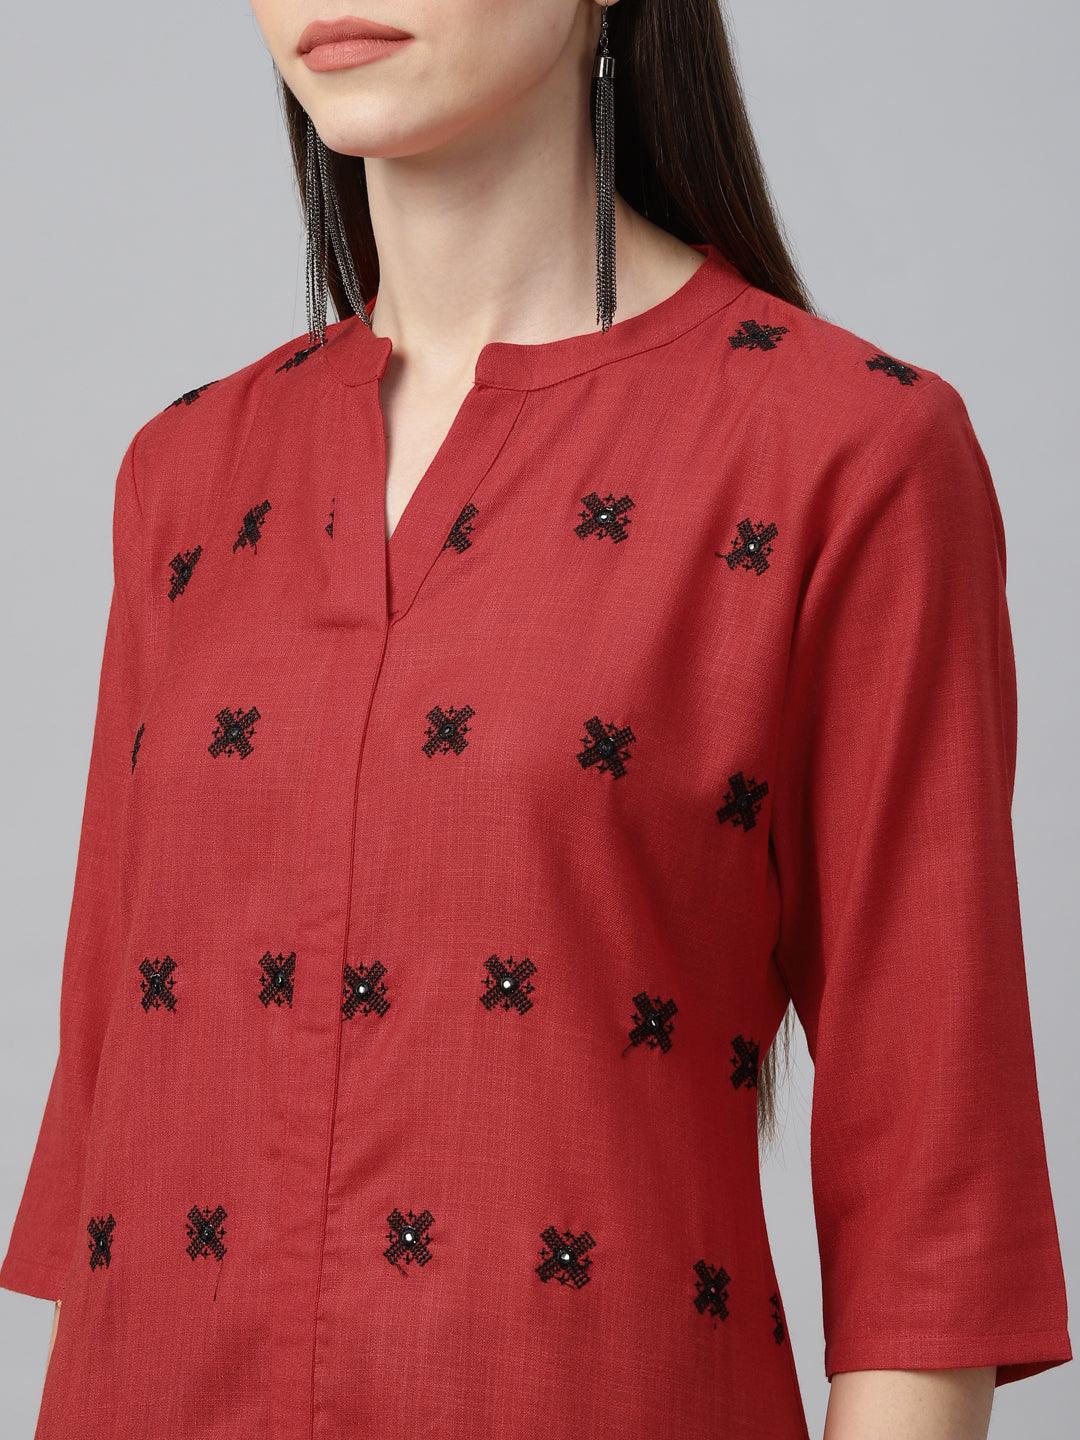 Red Embroidered Cotton Kurta - Libas